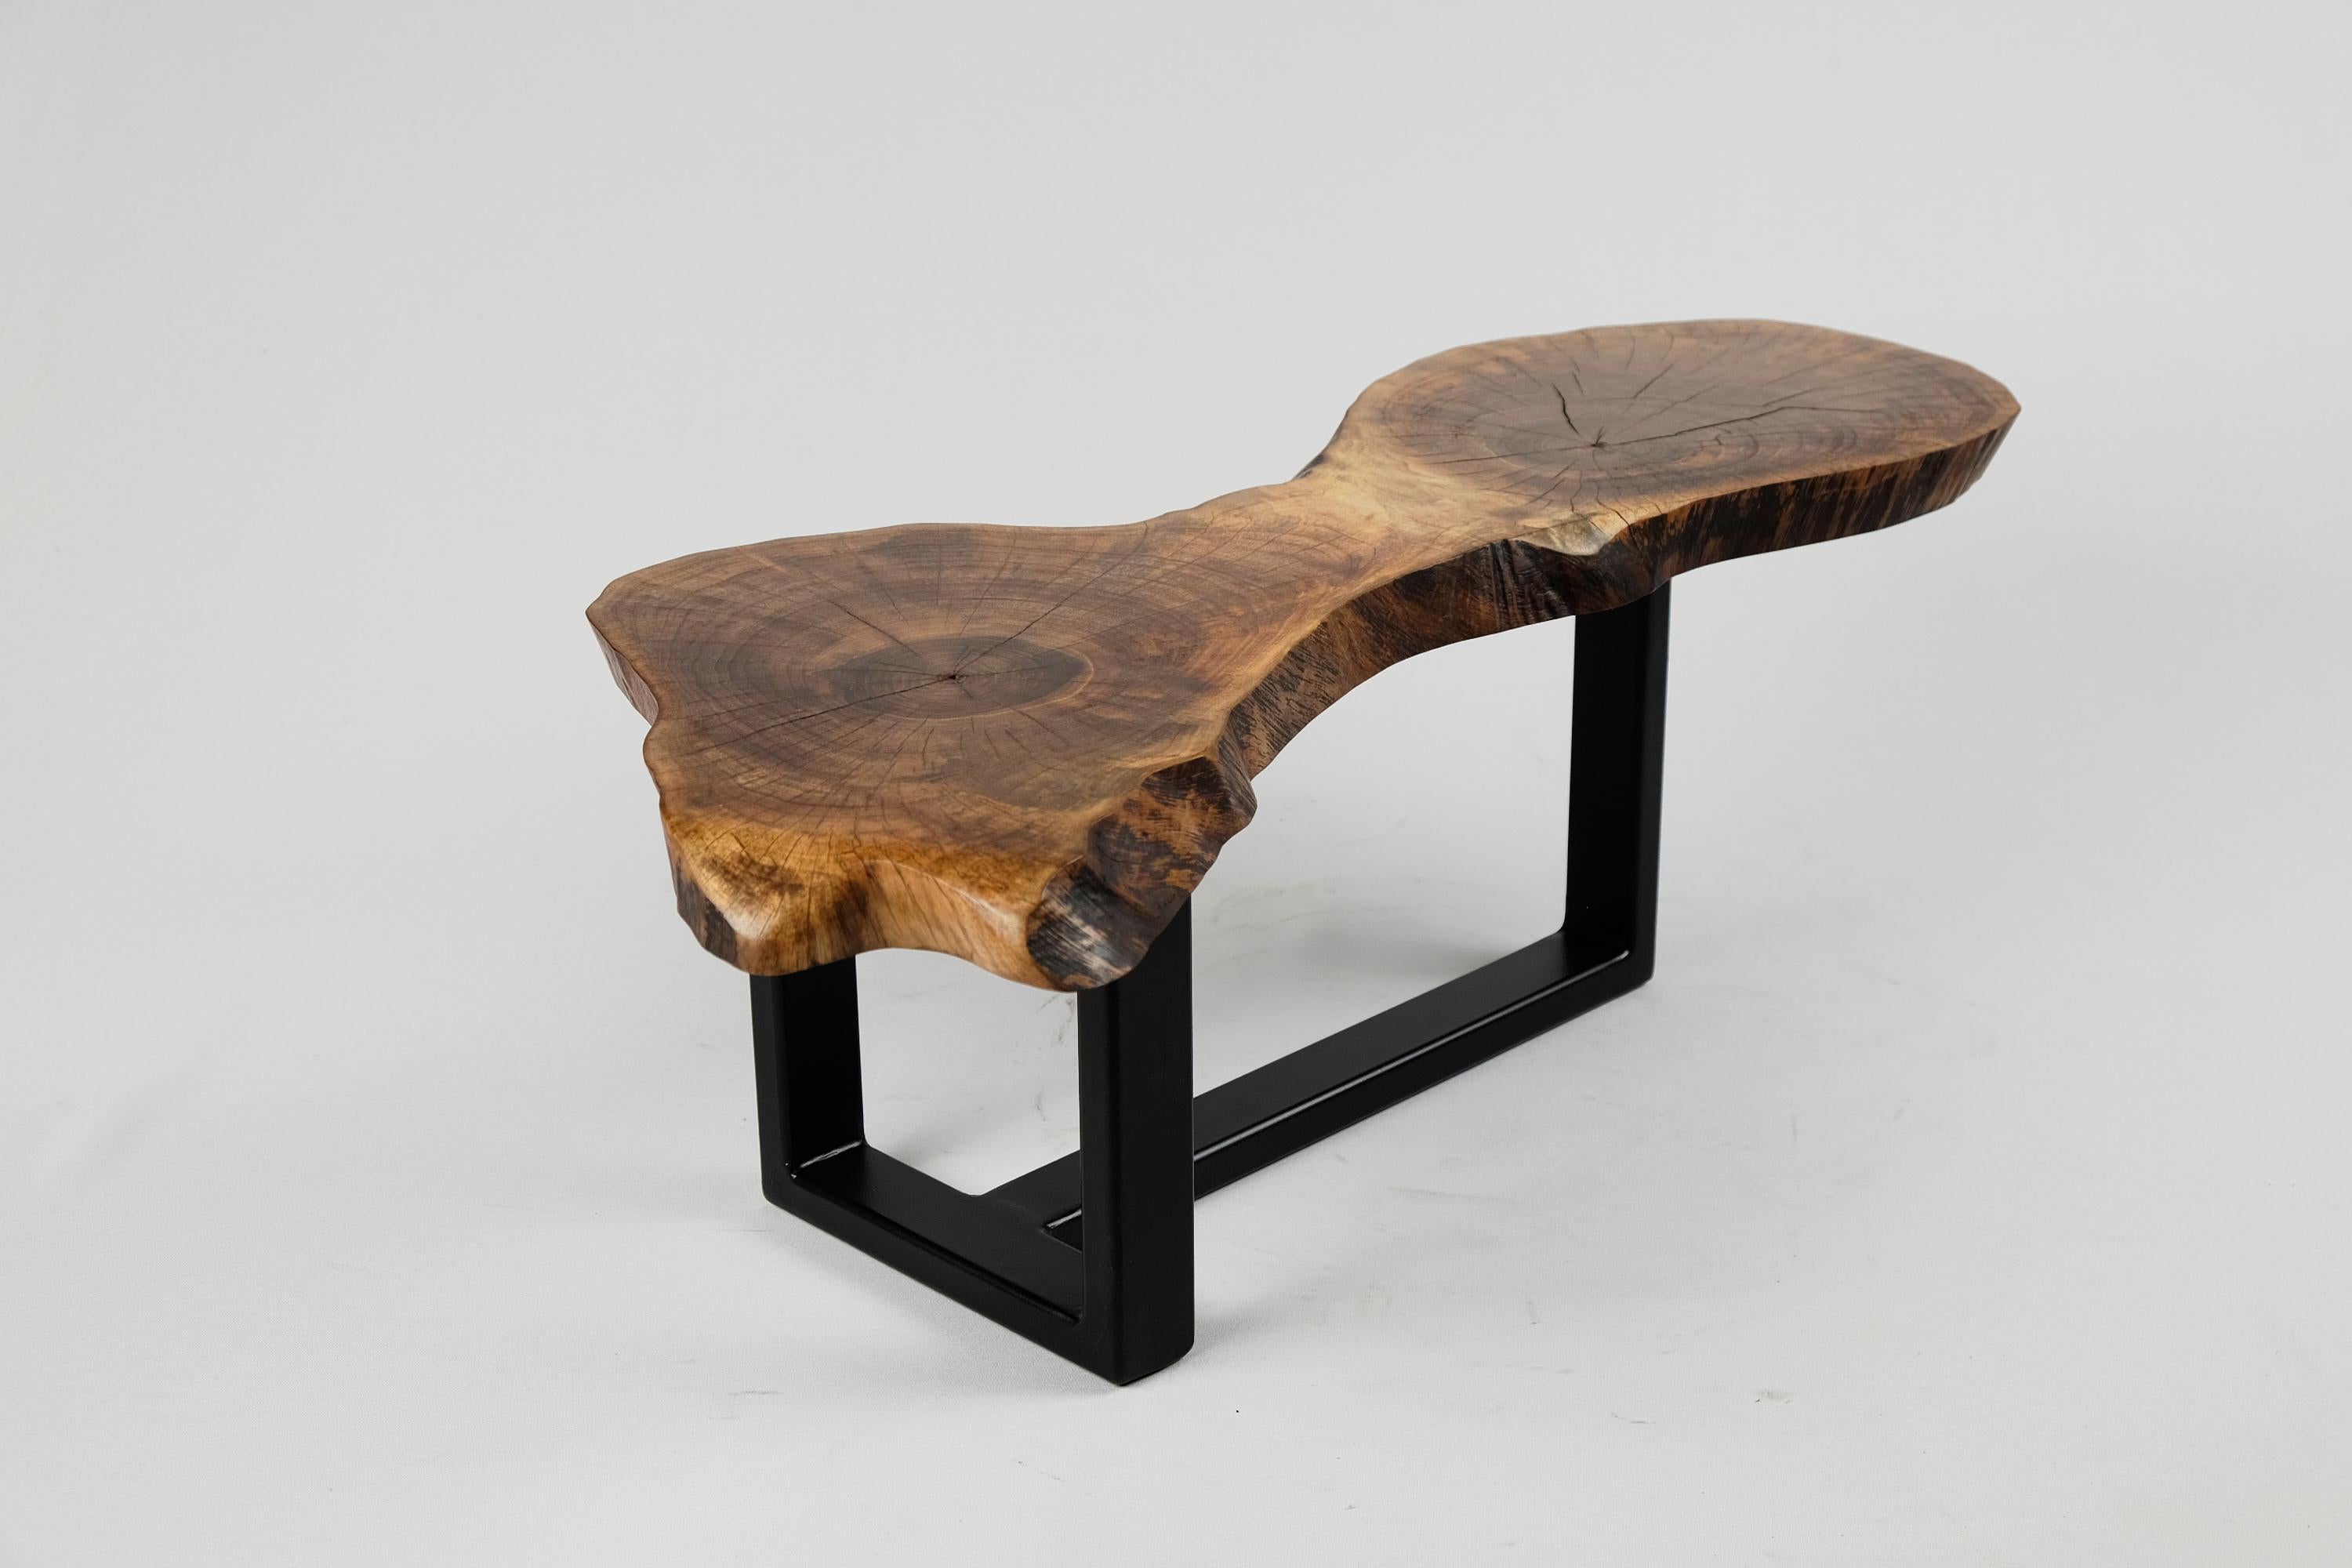 Original Contemporary Design, Burnt Oak with Steel, Unique Side Table, Logniture 1